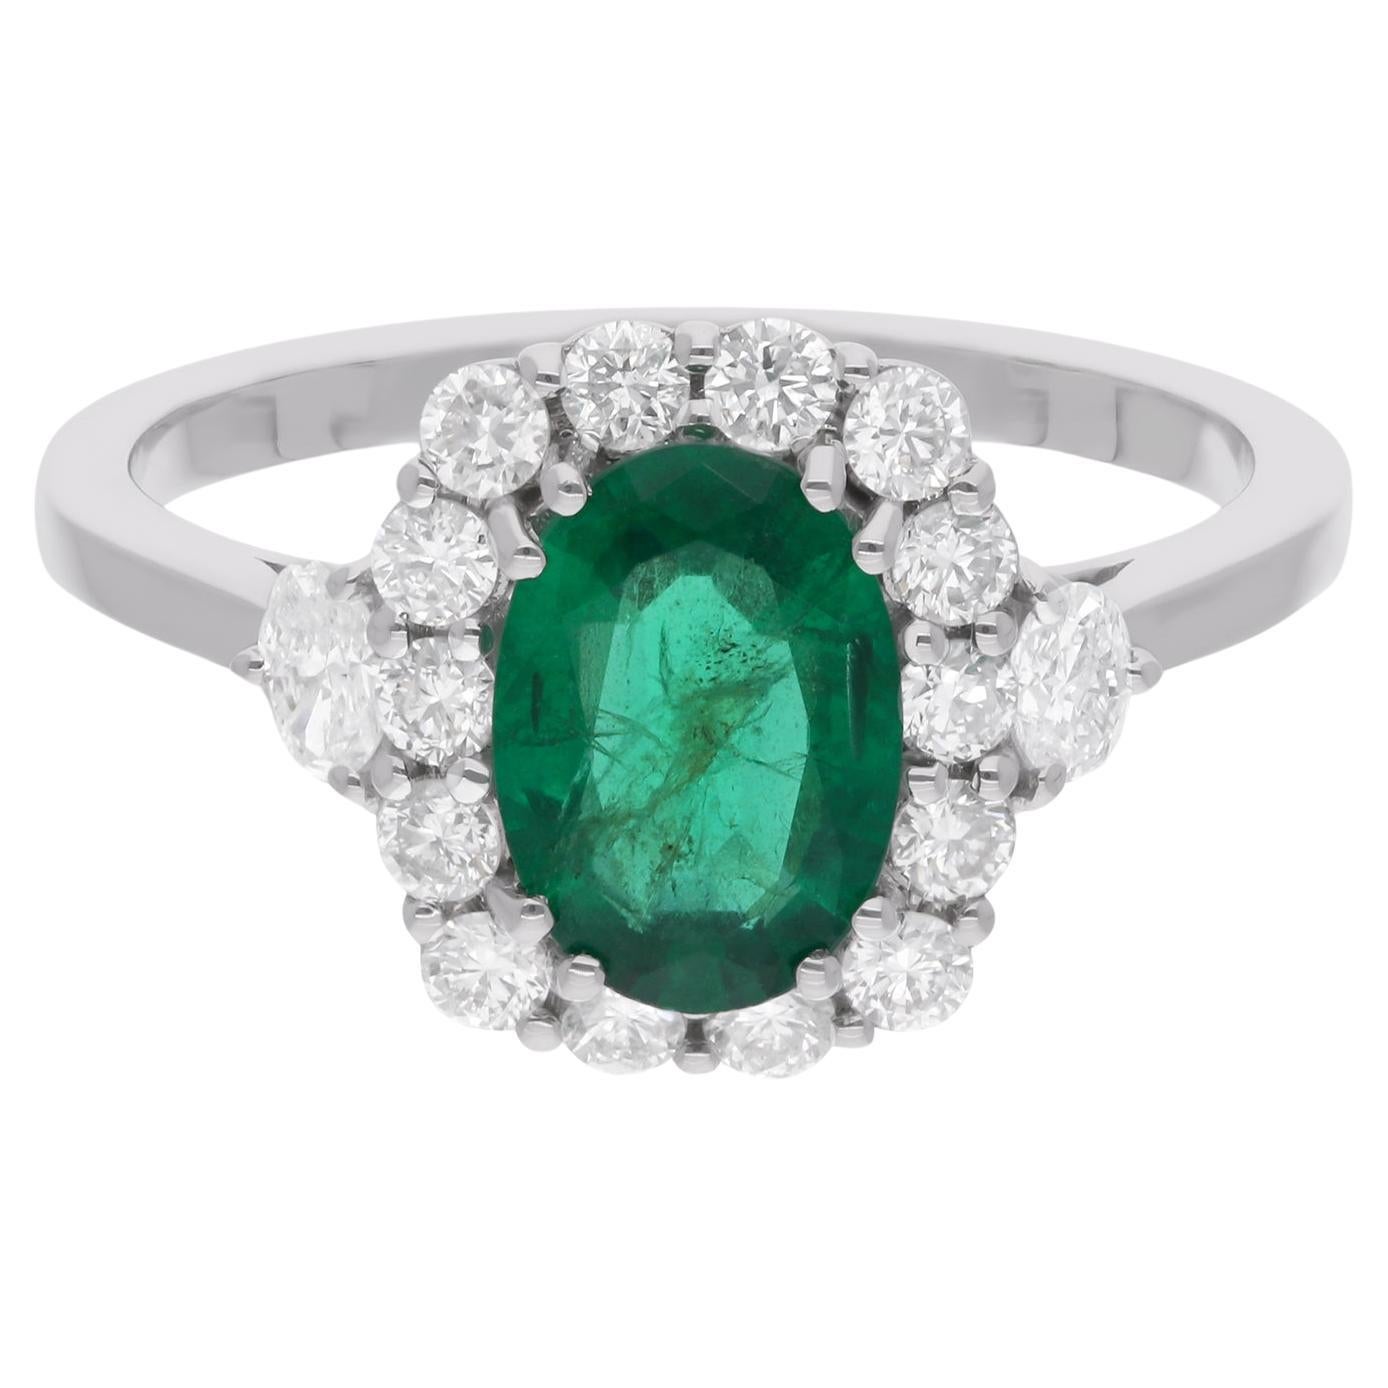 Oval Zambian Emerald Cocktail Ring Diamond 14 Karat White Gold Handmade Jewelry For Sale